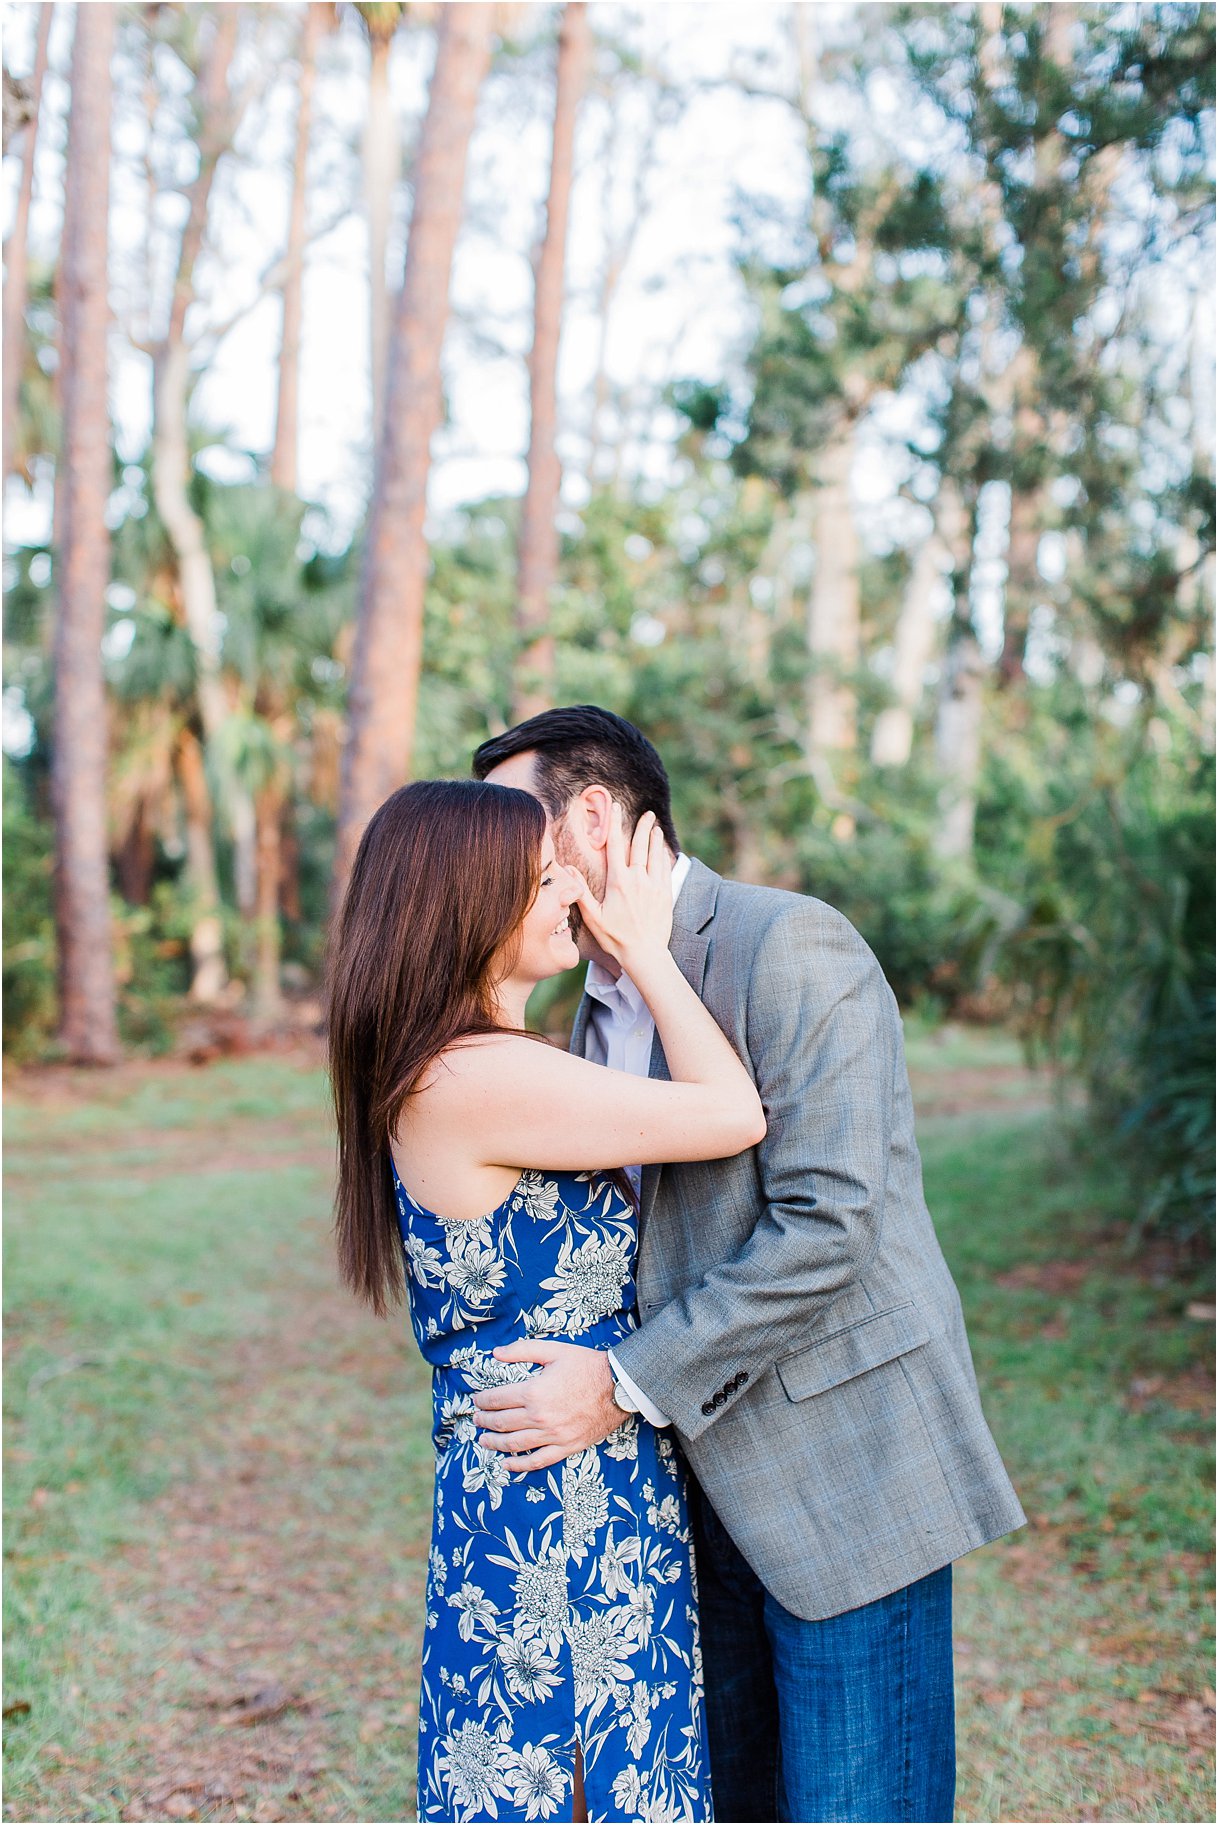 Tomoka Park Ormond Beach Florida Engagement Session Orlando Wedding Photographer PSJ Photography16.jpg